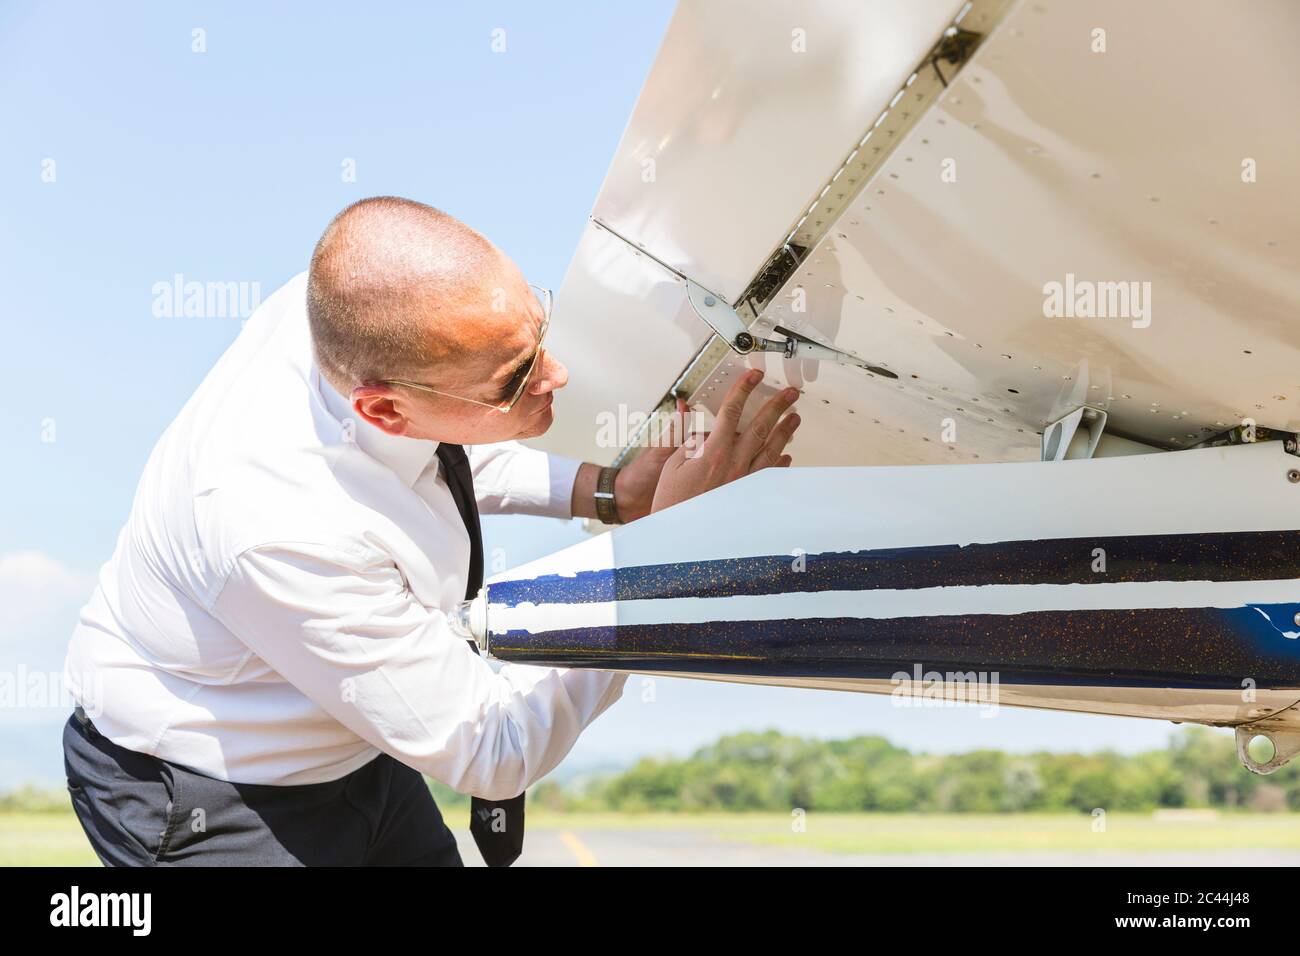 Pilot doing pre flight inspection on his sports plane Stock Photo